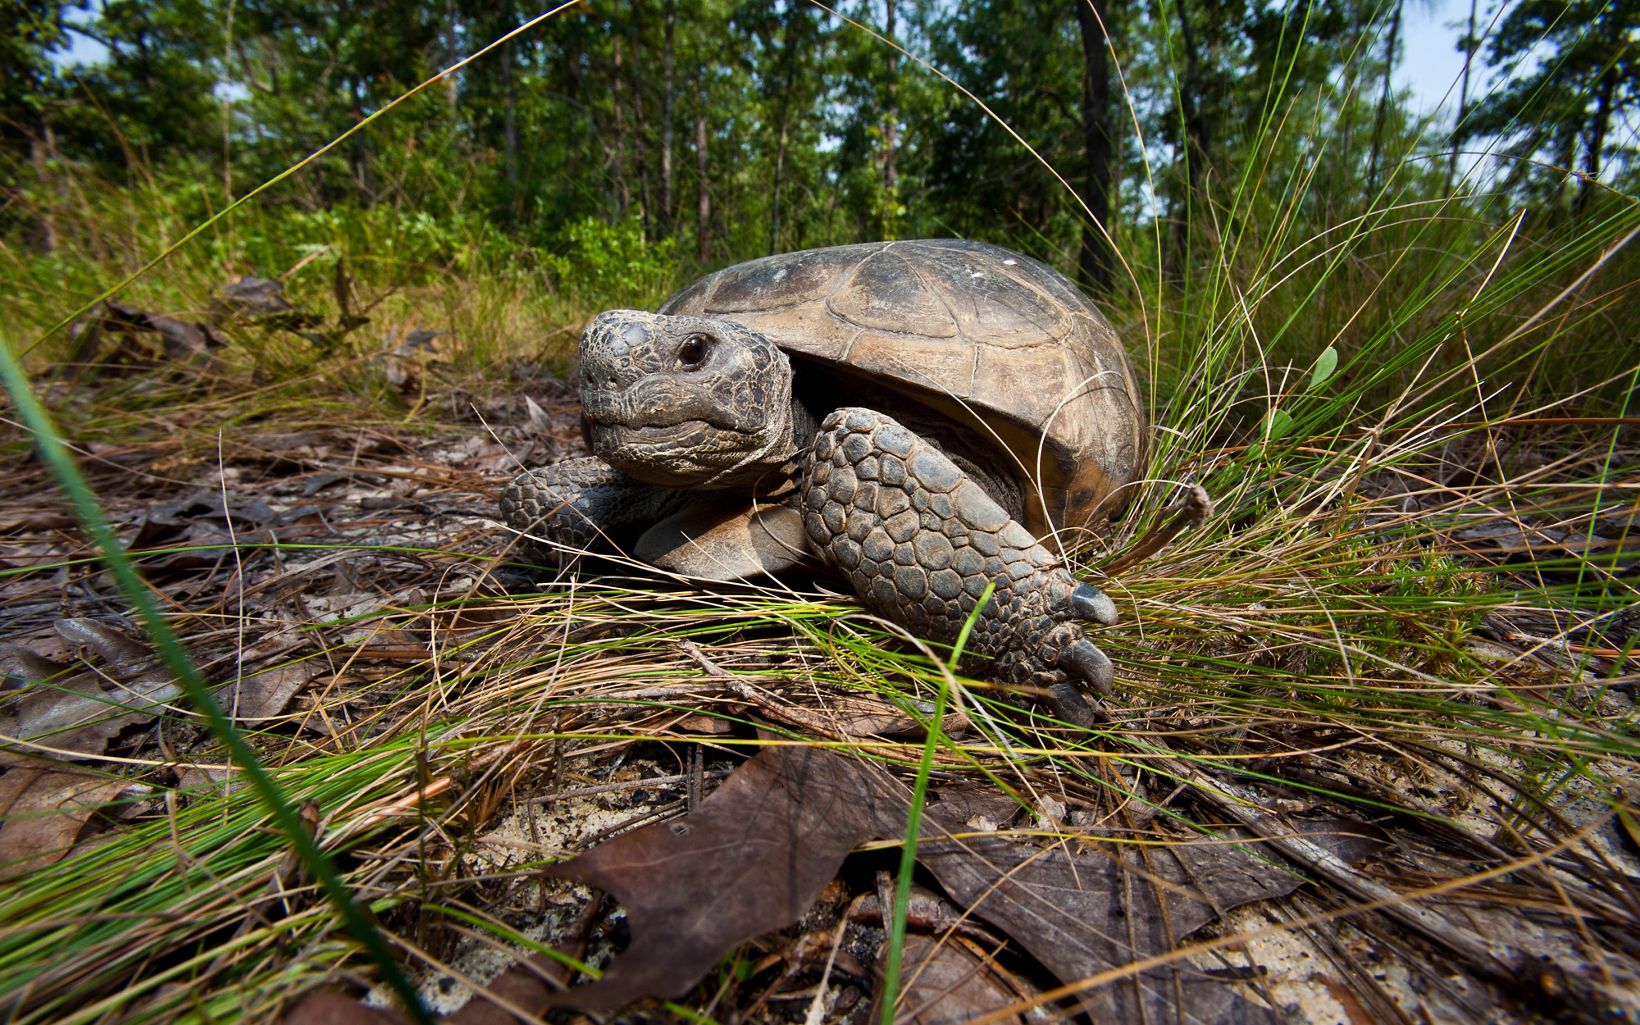 A gopher tortoise walking towards the camera through grass.